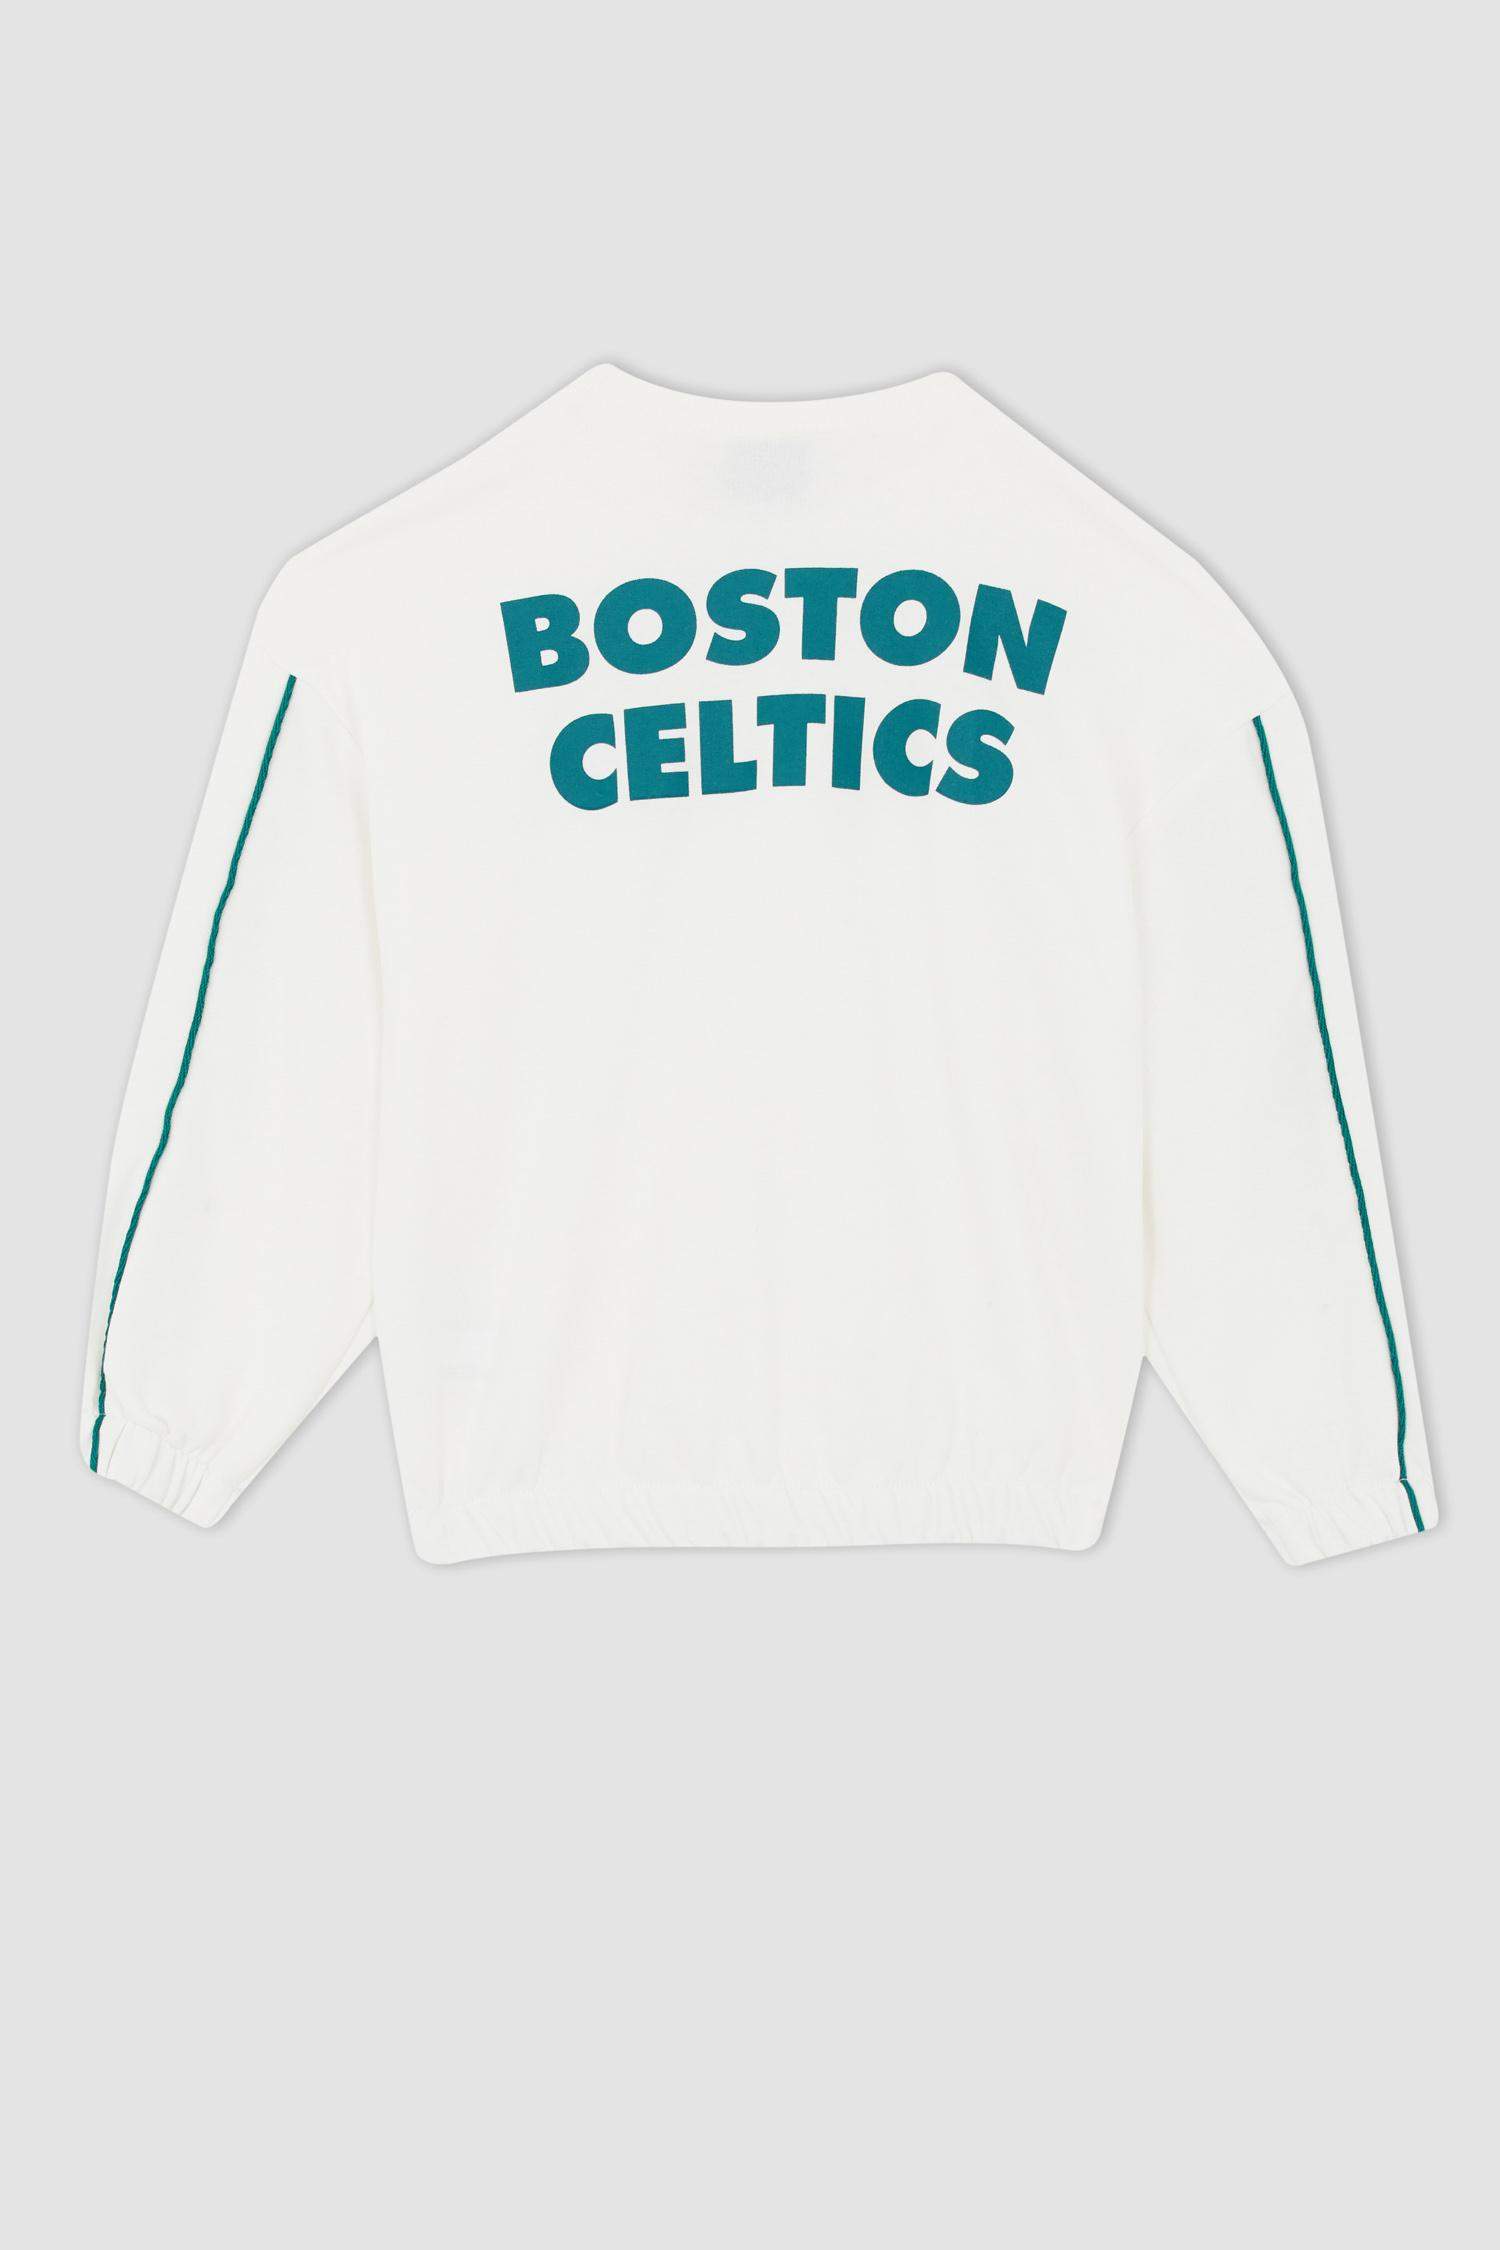 Boston Celtics Crewneck Sweatshirts for Sale